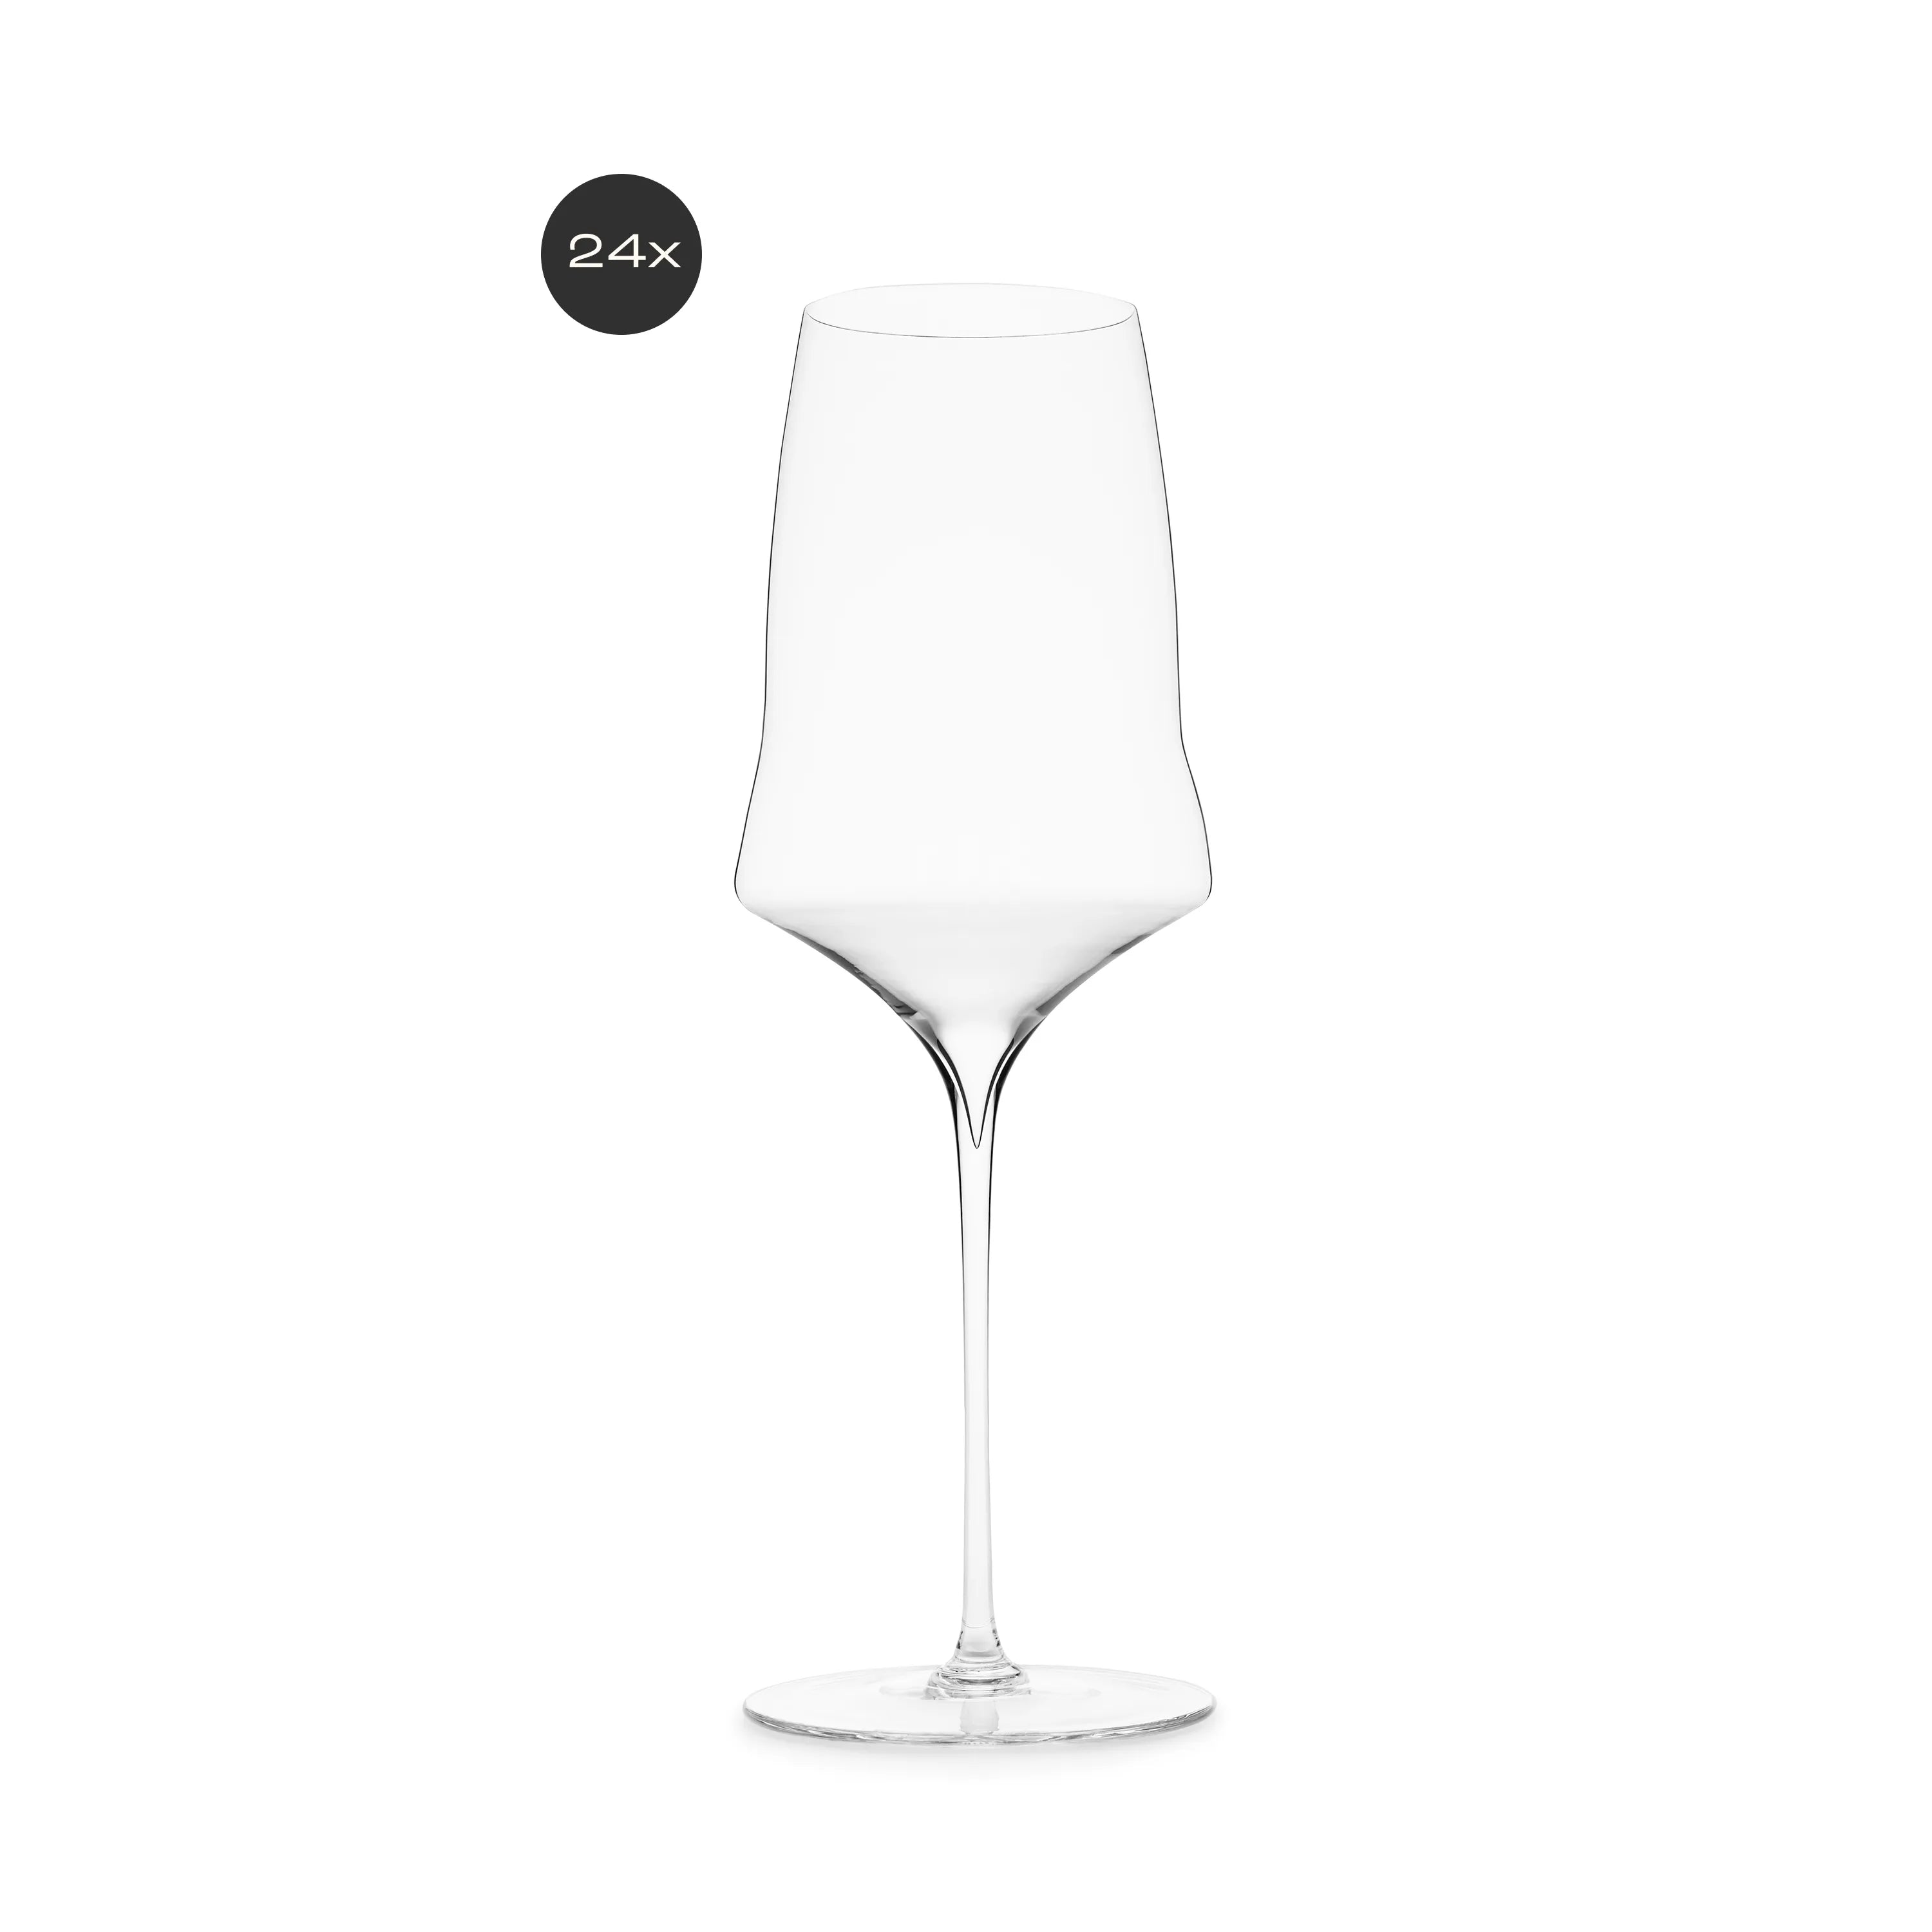 JOSEPHINE No 1 by Josephinenhütte – White wine glasses #Set_Set of 24